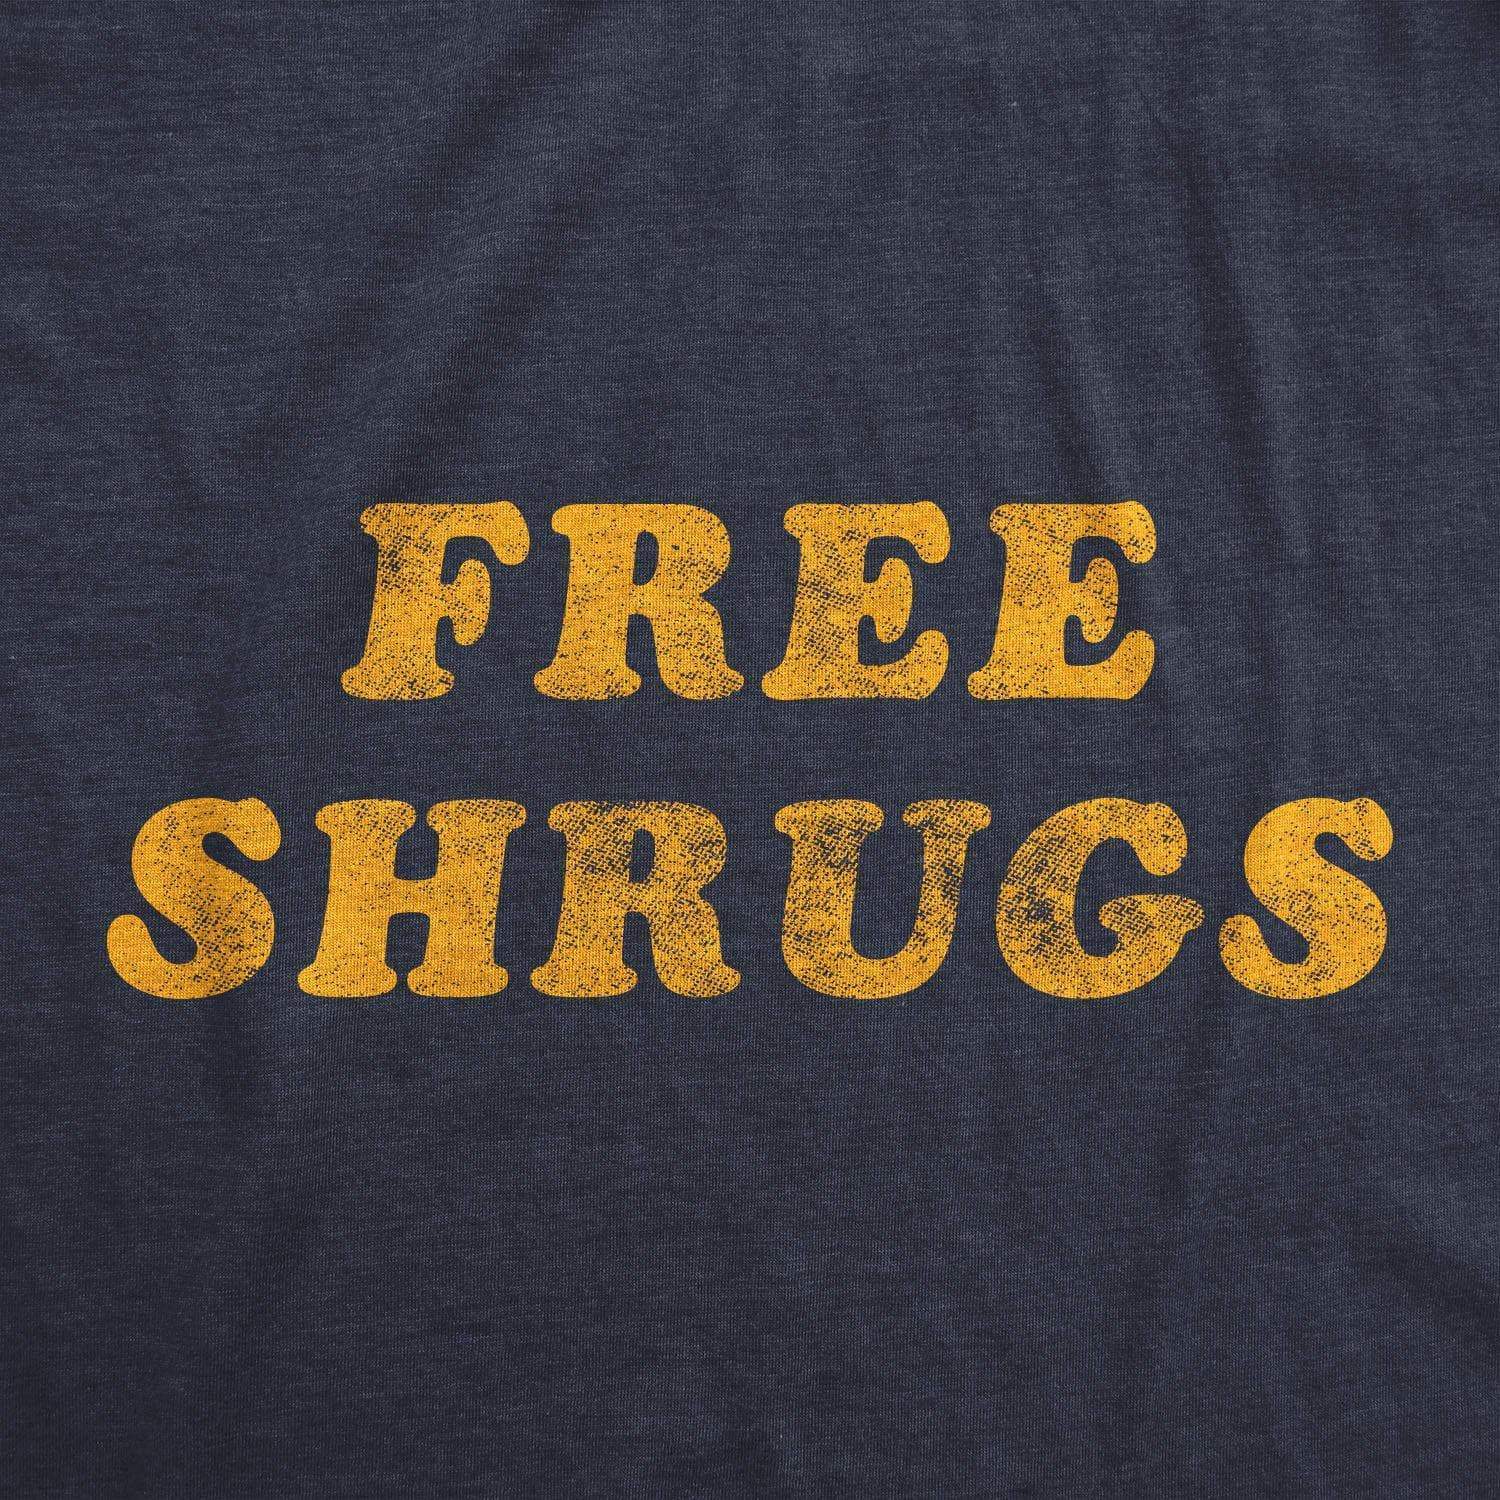 Free Shrugs Women's Tshirt - Crazy Dog T-Shirts